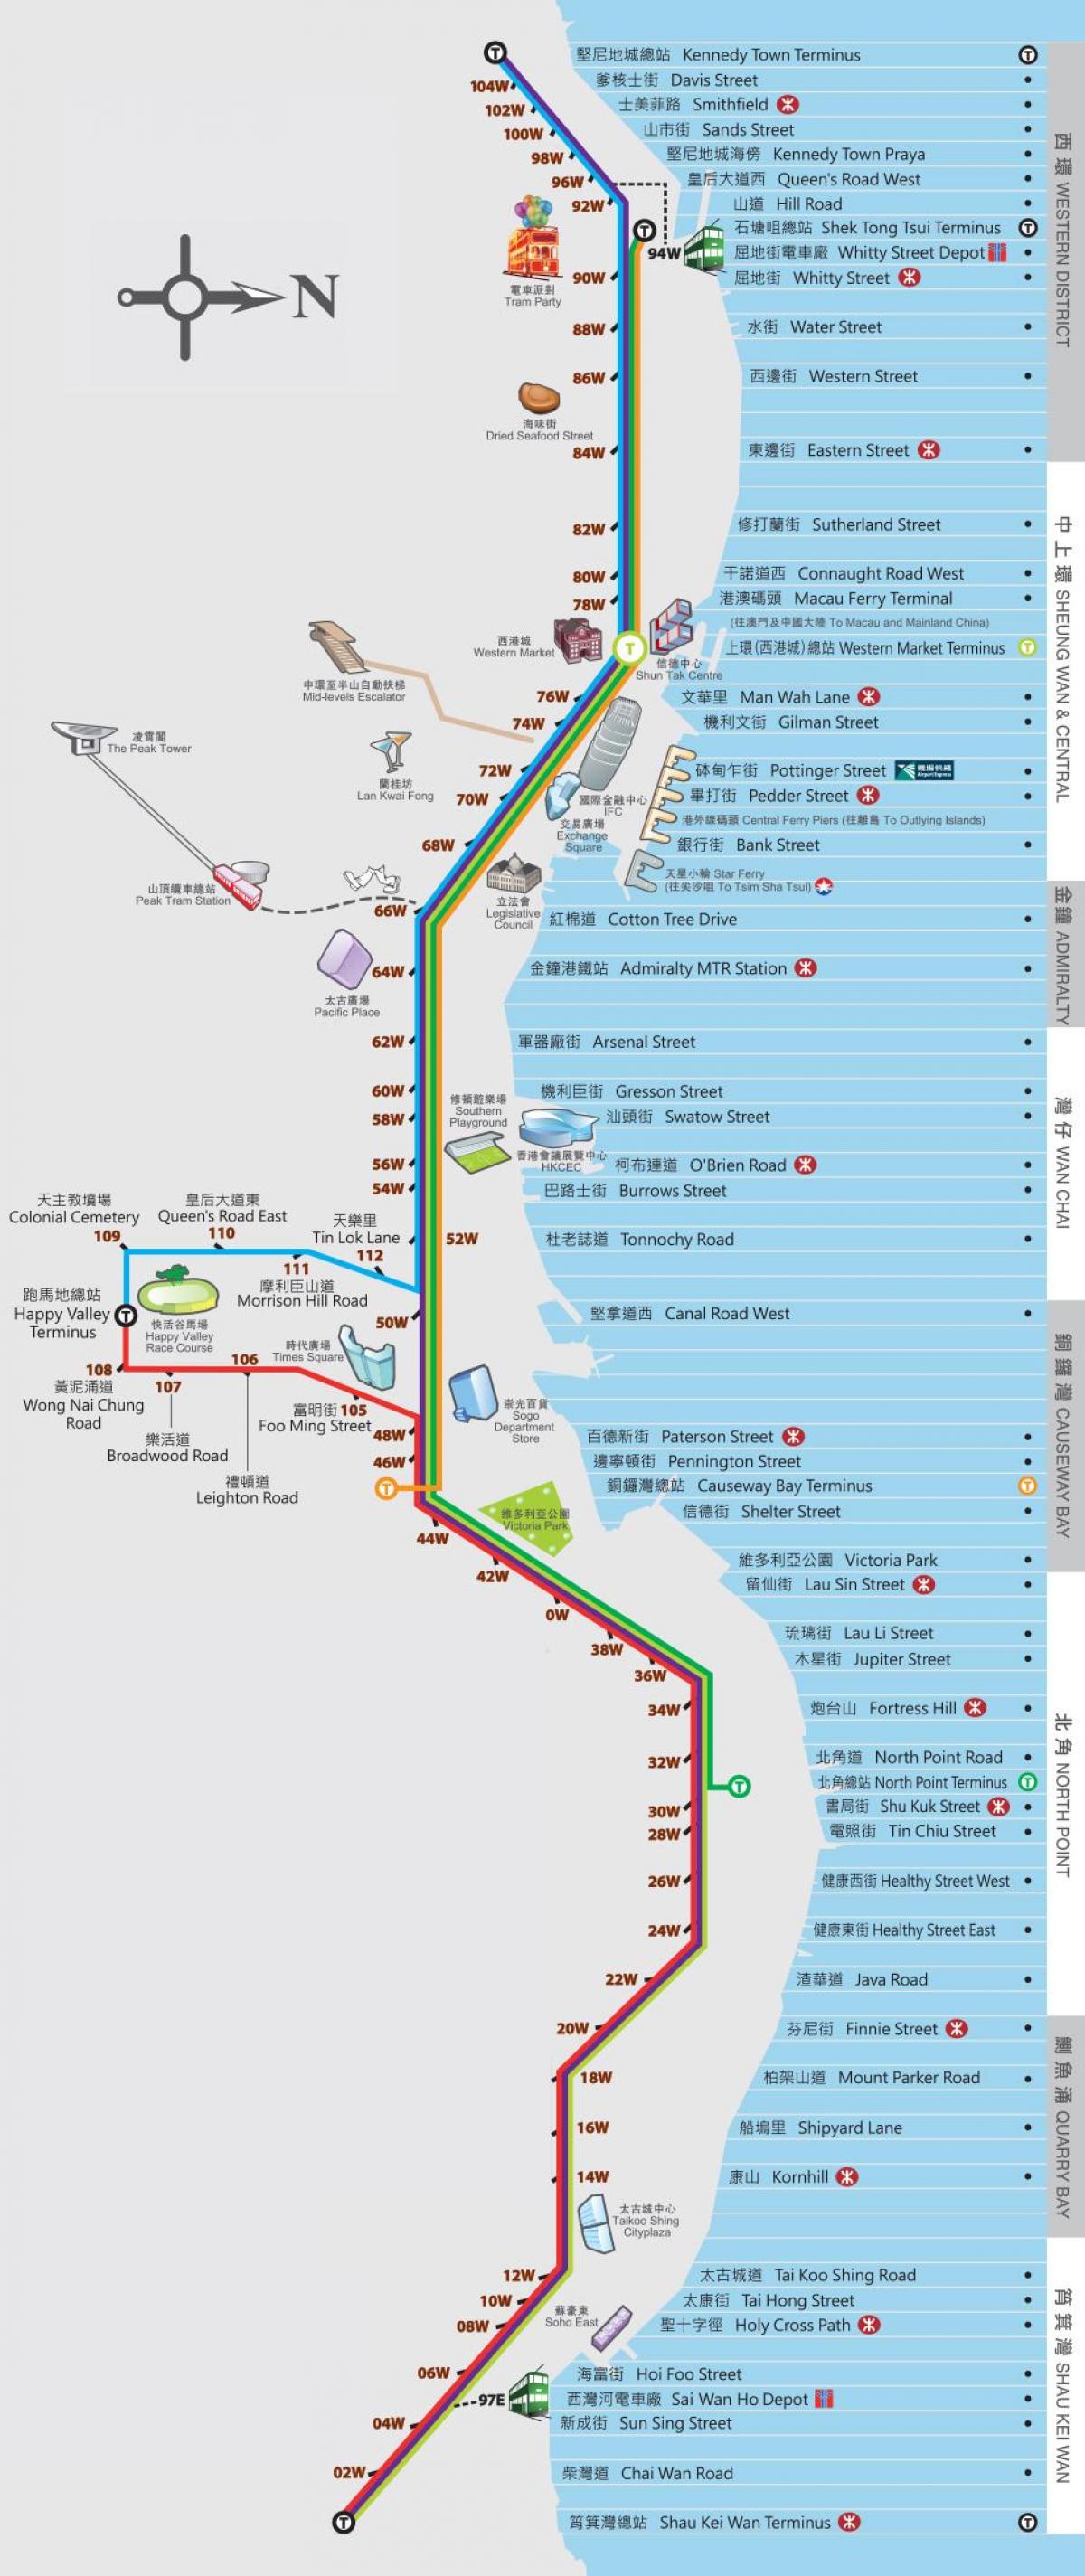 هونغ كونغ دينغ دينغ الترام خريطة